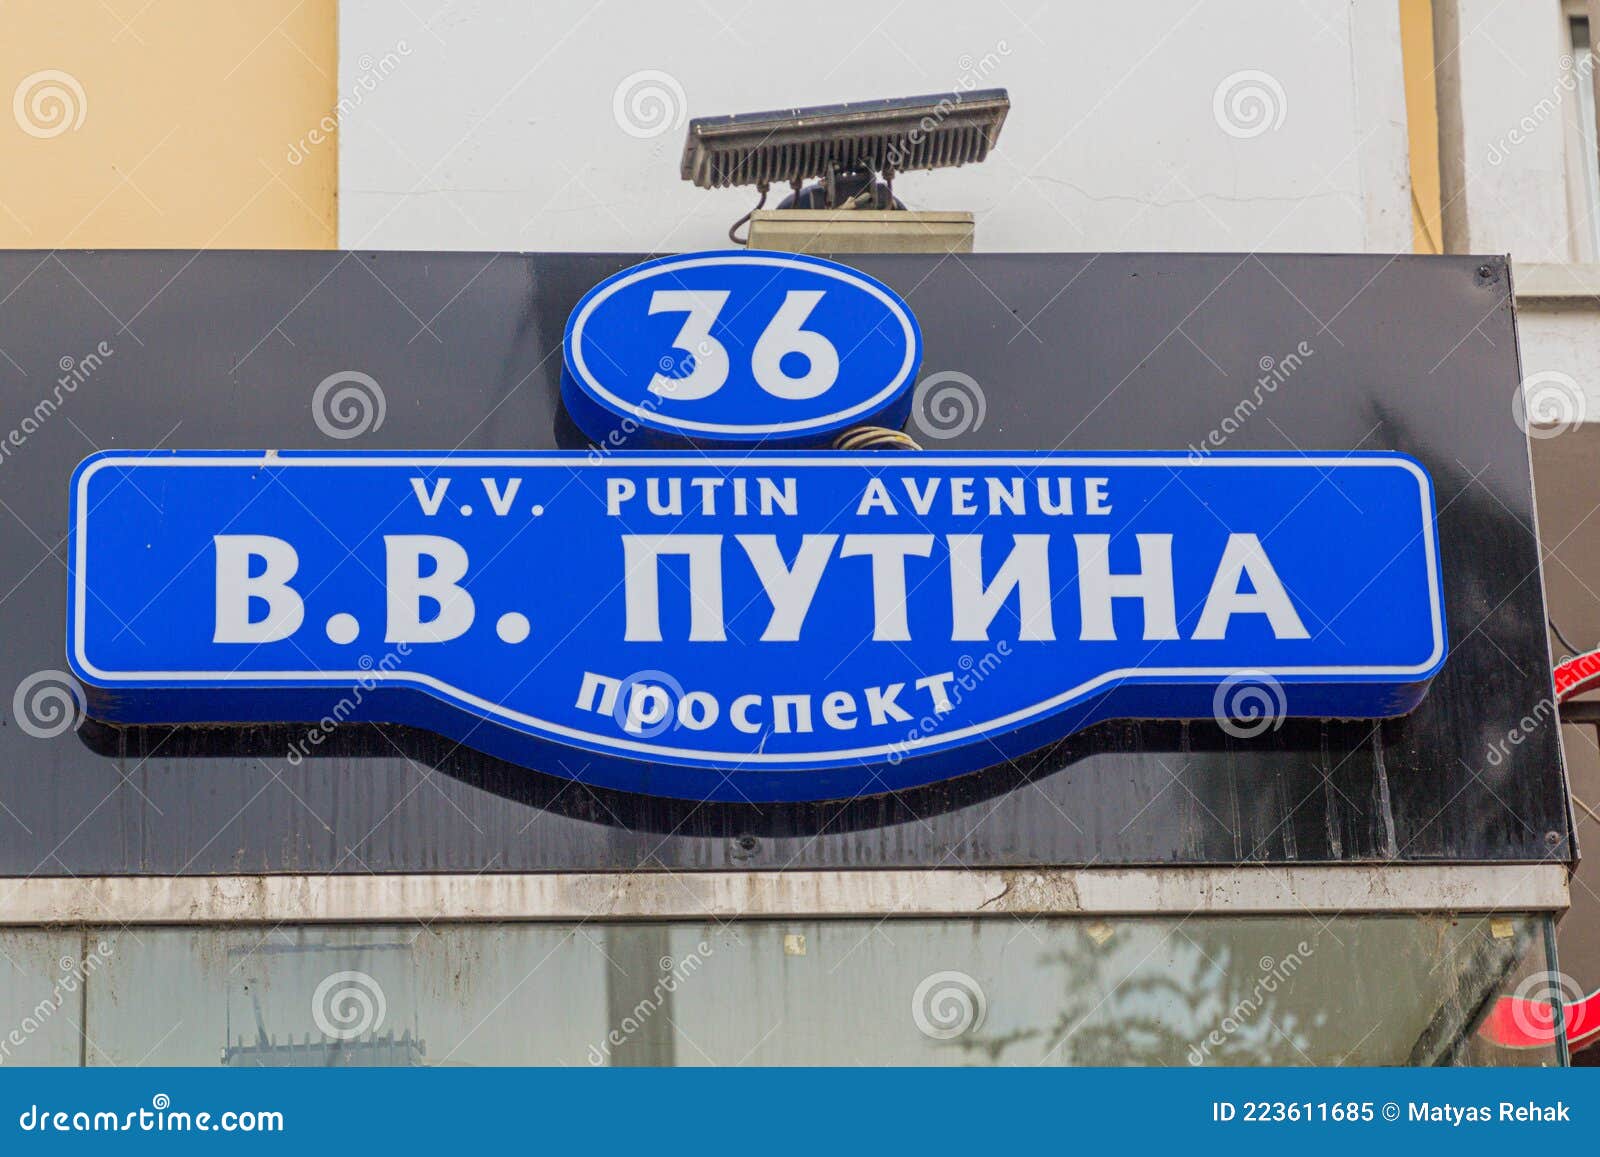 street sign v. v. putin avenue located in grozny, chechen republic, russ